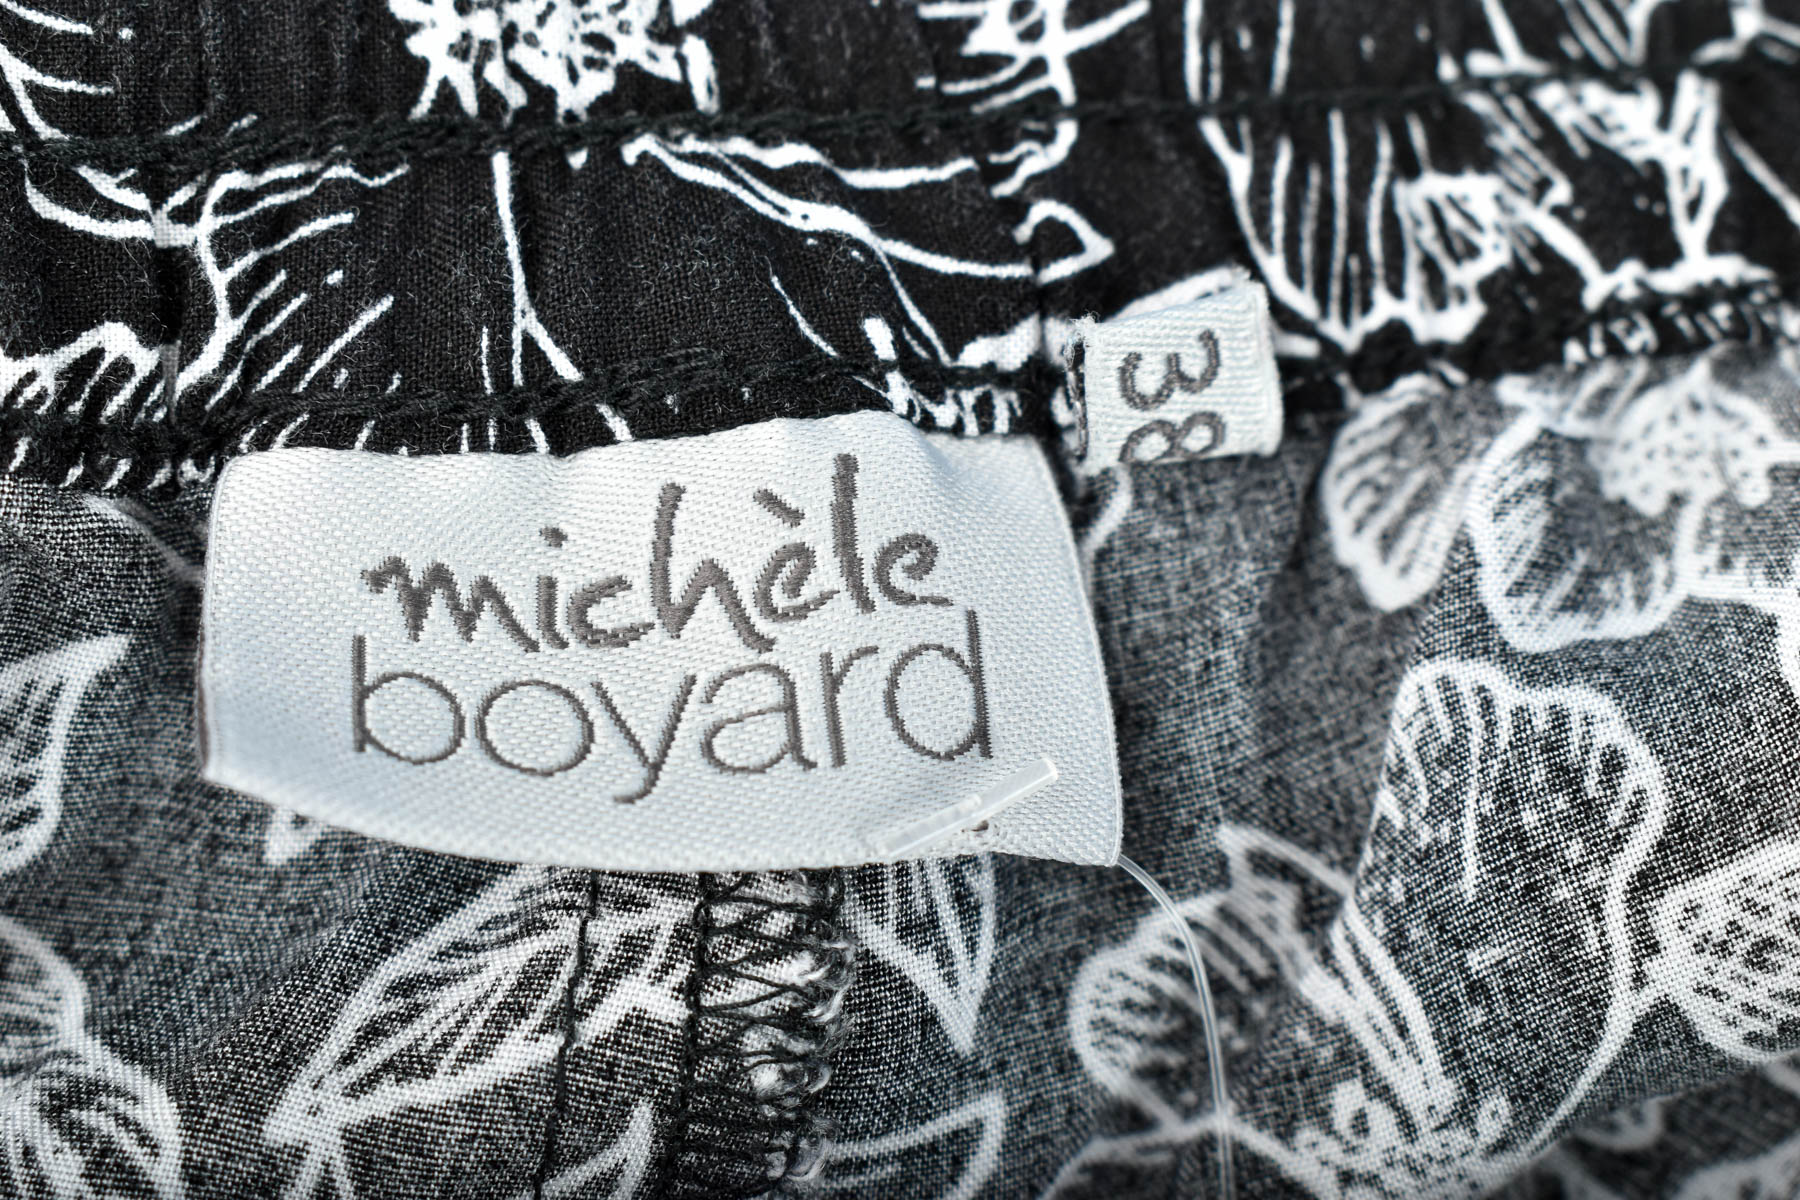 Female shorts - Michele Boyard - 2